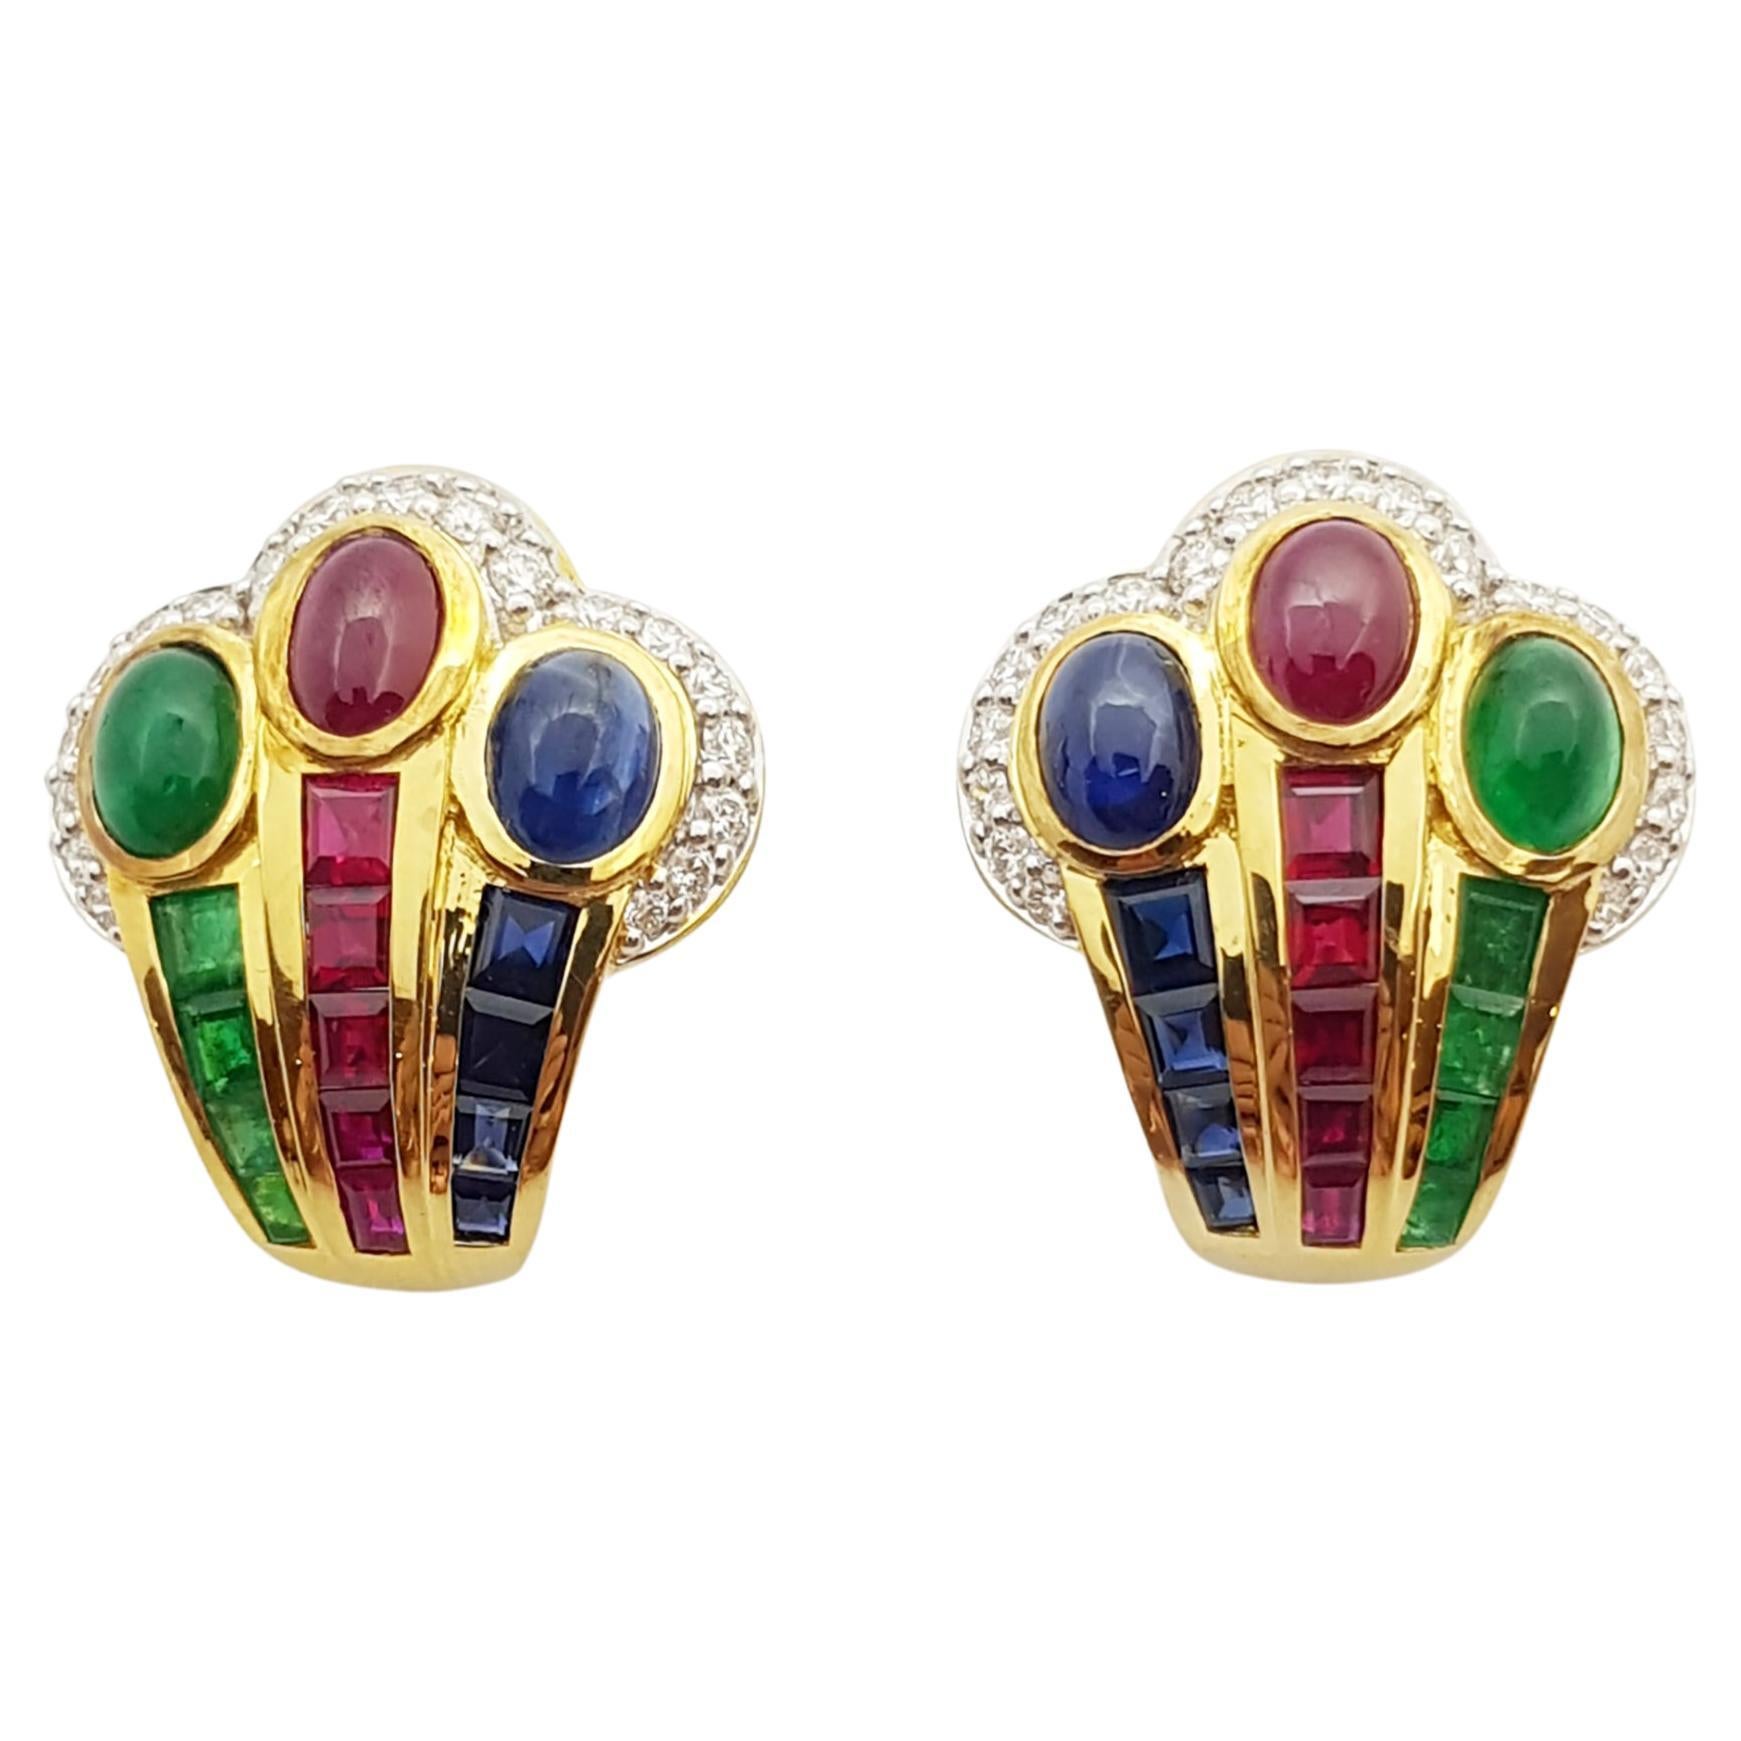 Ruby, Emerald, Blue Sapphire and Diamond Earrings Set in 18 Karat Gold Settings